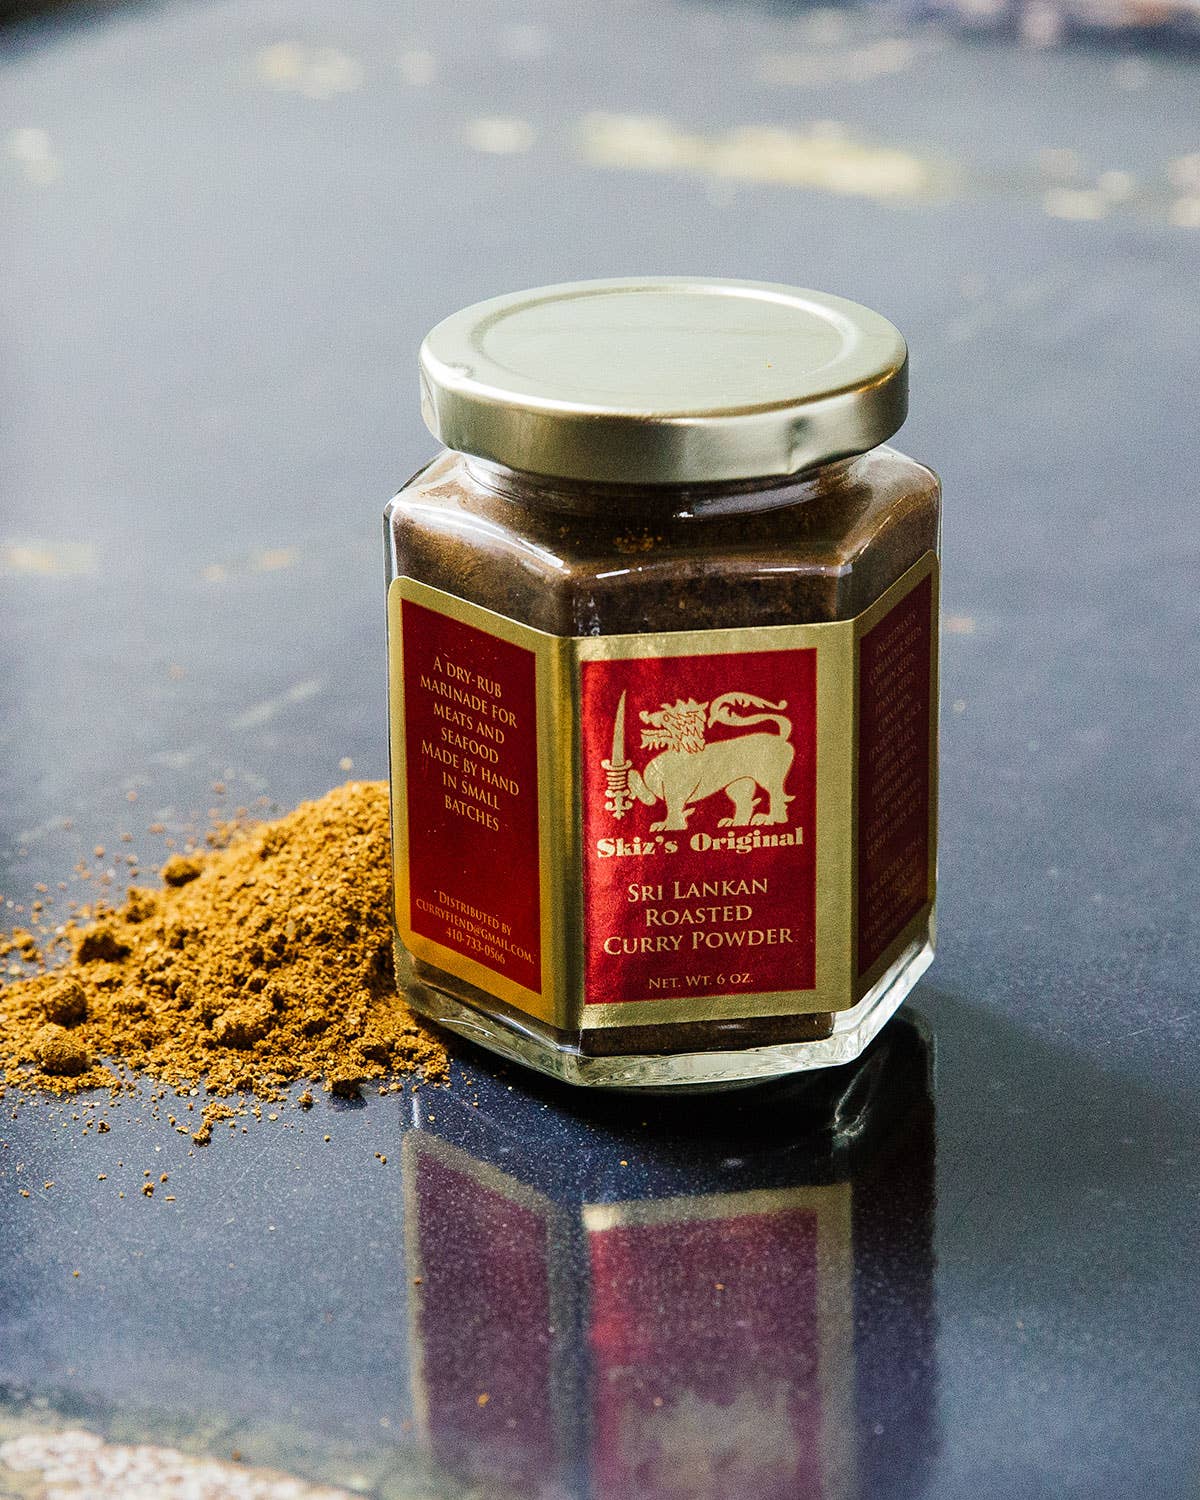 The Sri Lankan Secret to Crazy-Good Curry Powder